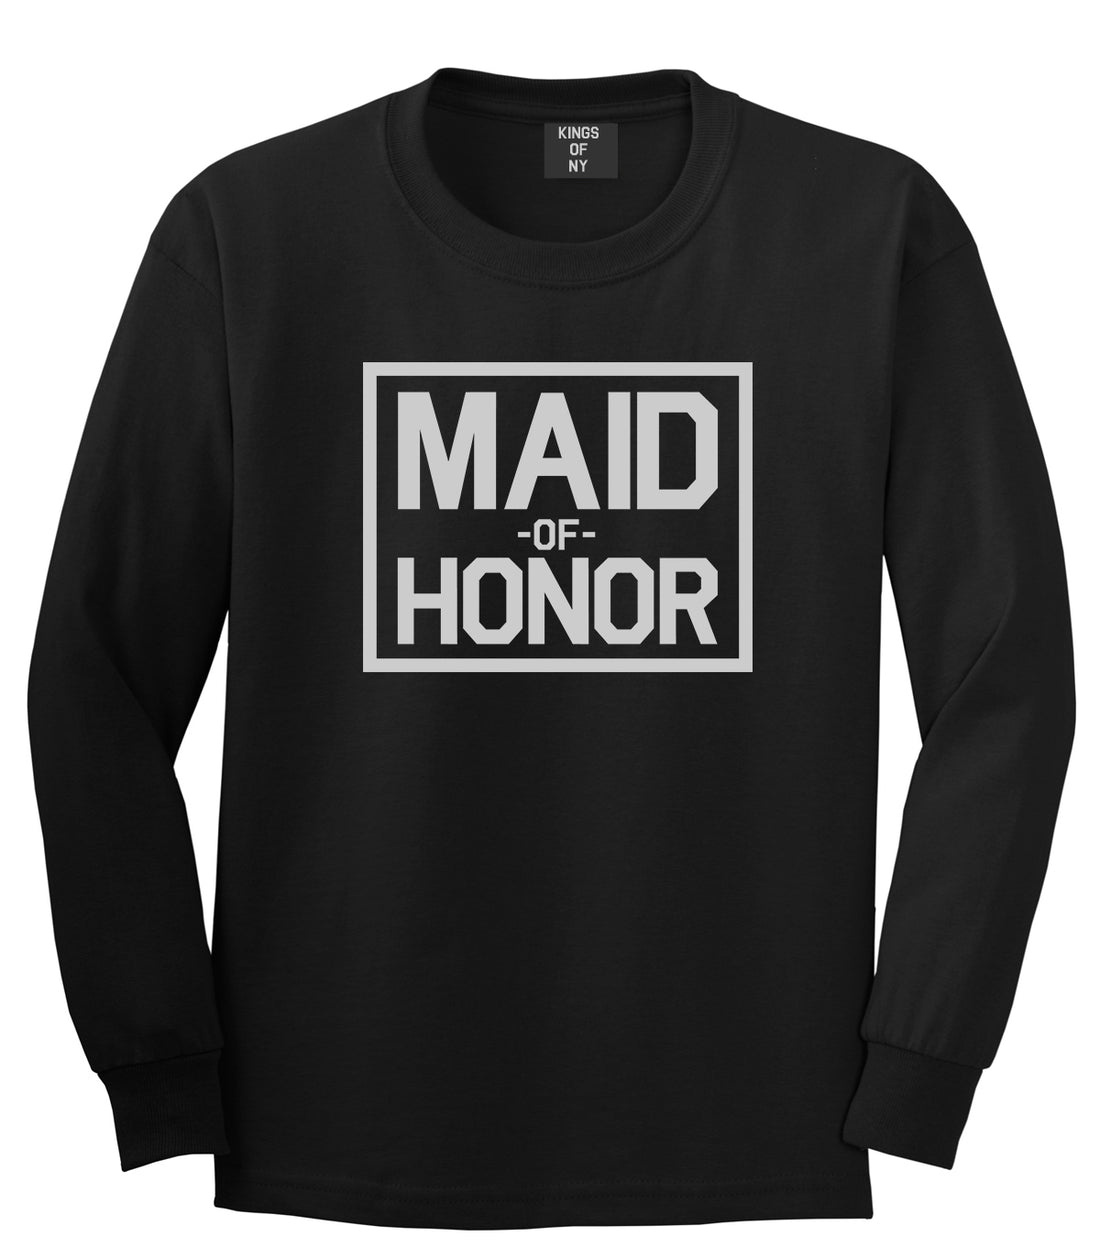 Maid Of Honor Wedding Mens Black Long Sleeve T-Shirt by Kings Of NY